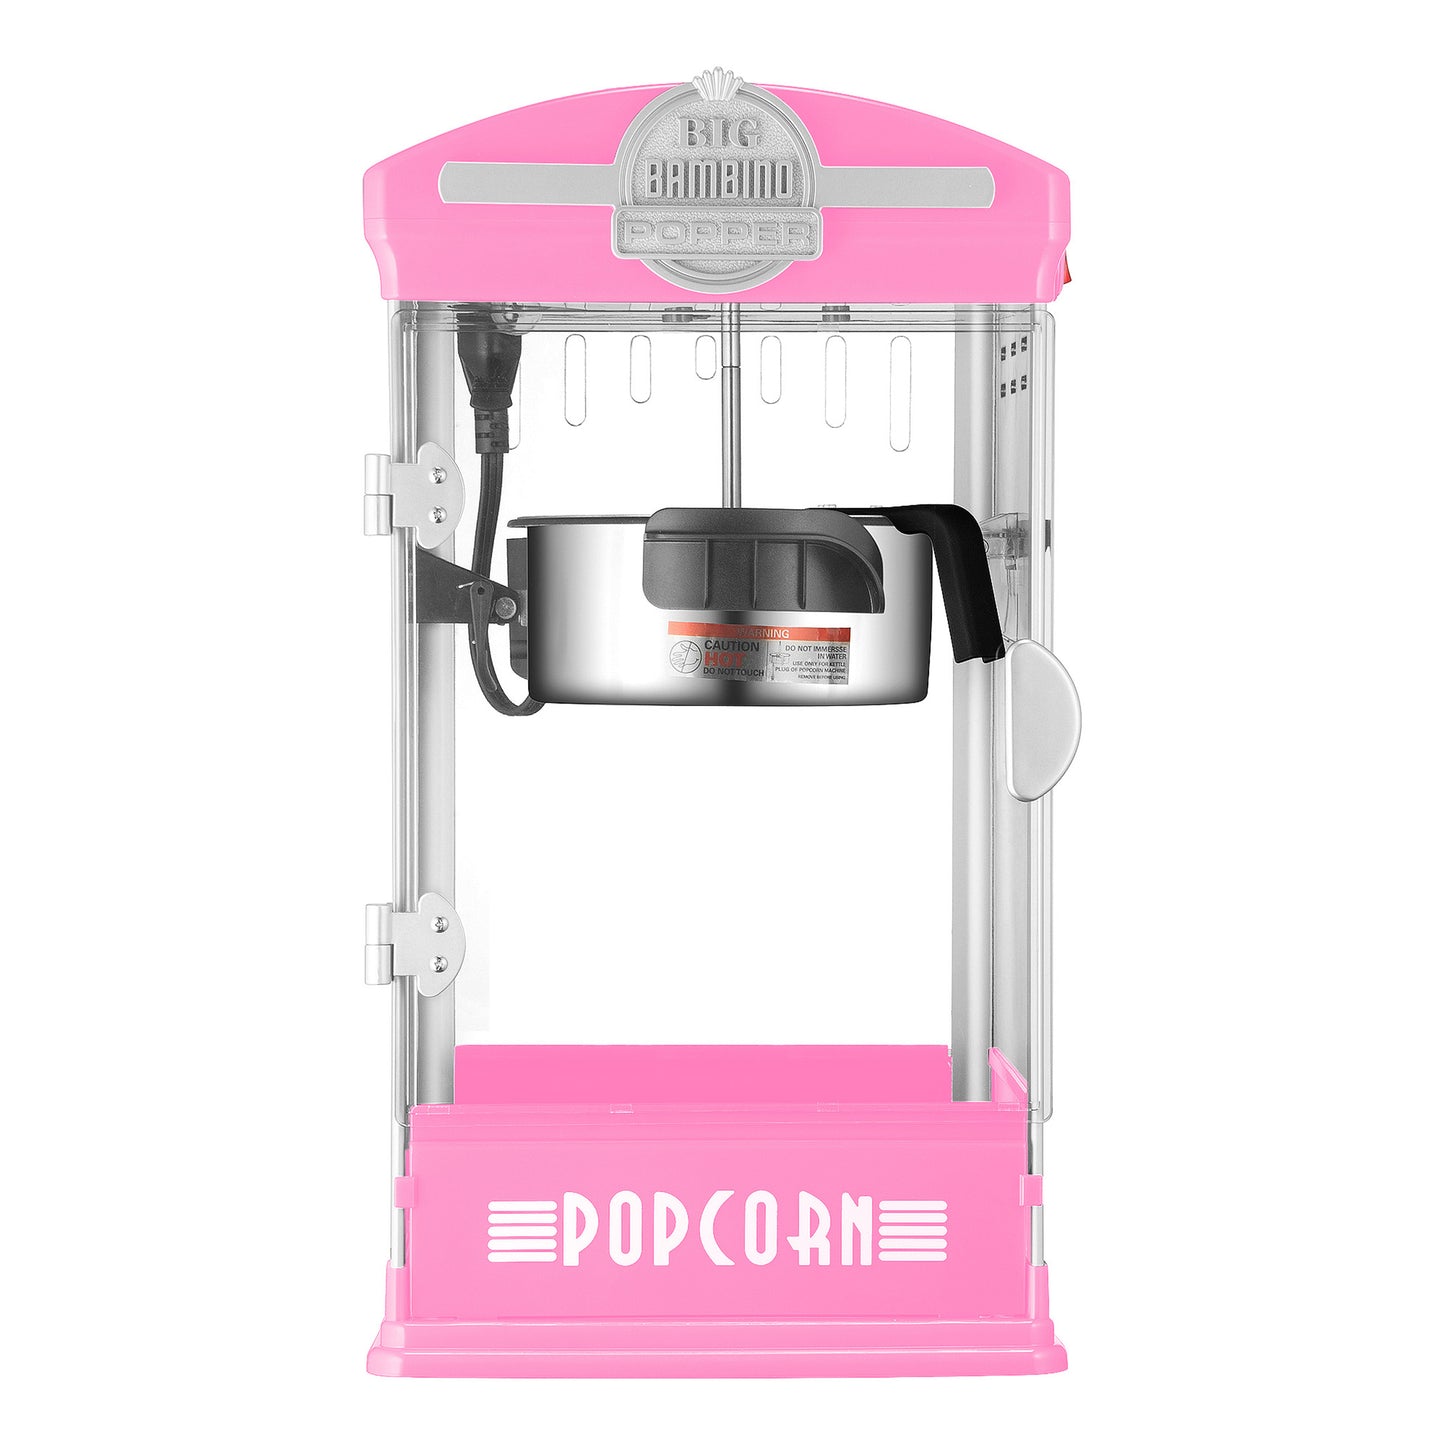 Big Bambino Countertop Popcorn Machine with 4 Ounce Kettle - Pink